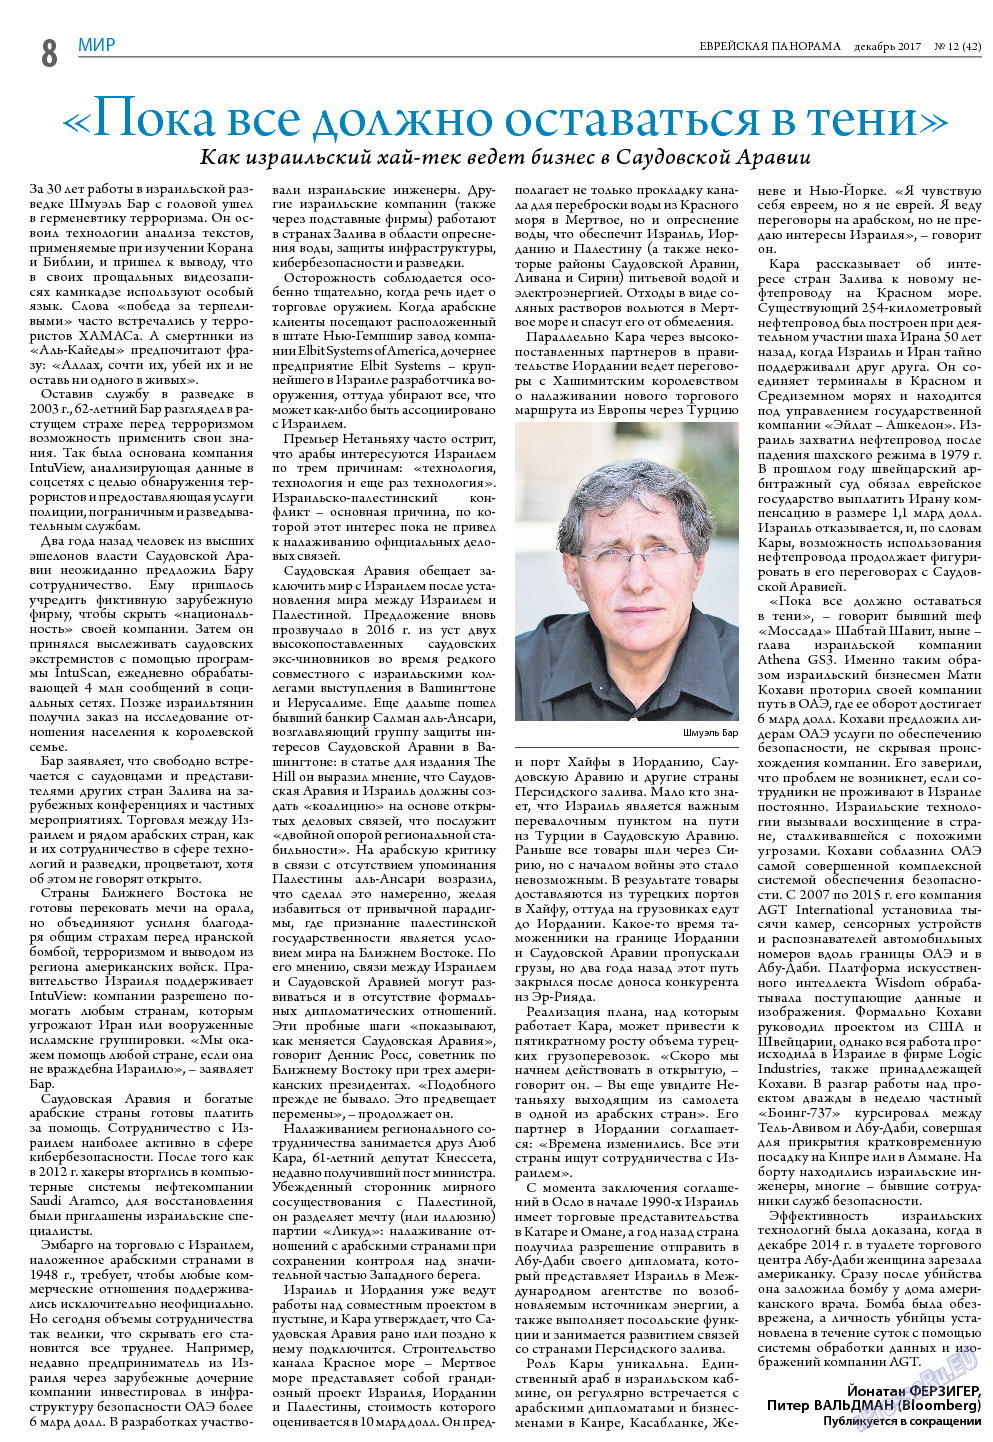 Еврейская панорама, газета. 2017 №12 стр.8